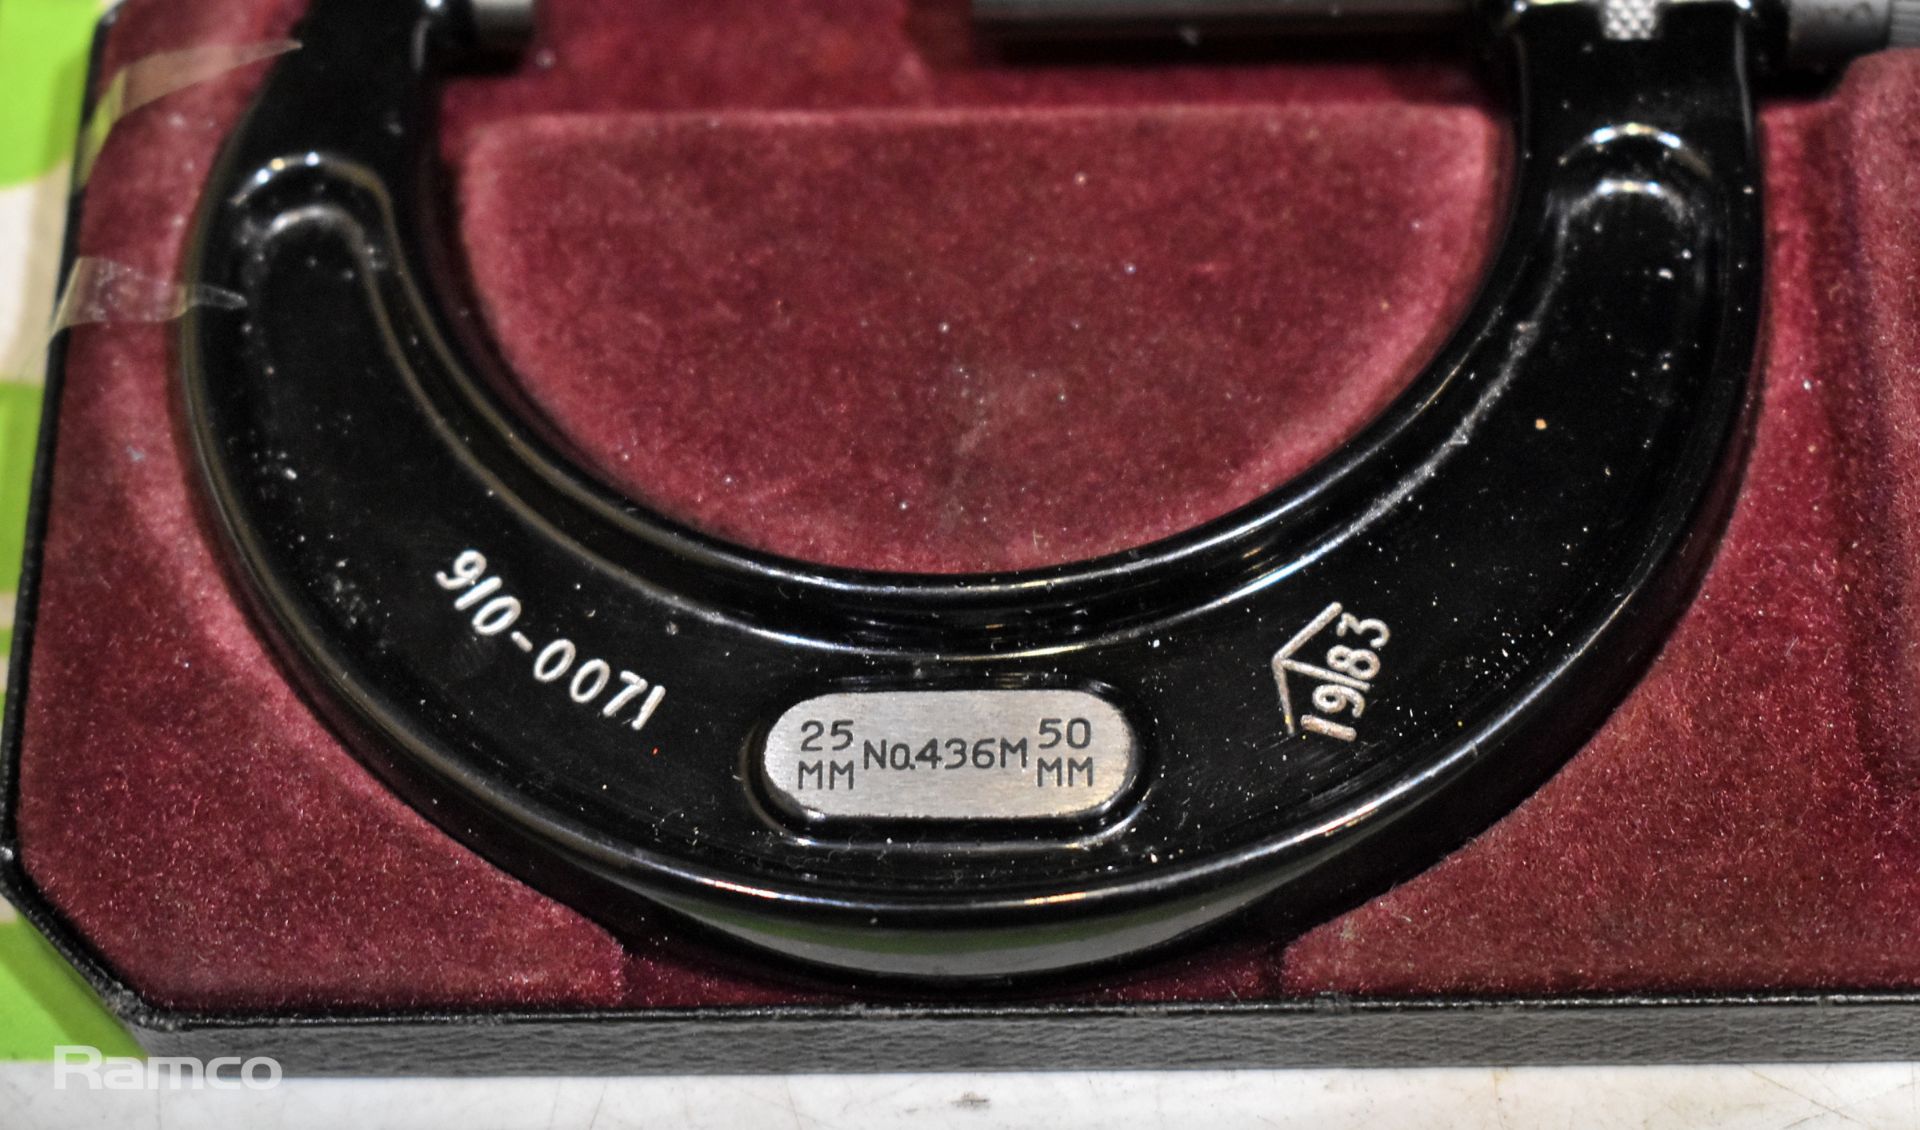 Starrett No 436 25-50mm micrometer caliper with case - Image 3 of 4